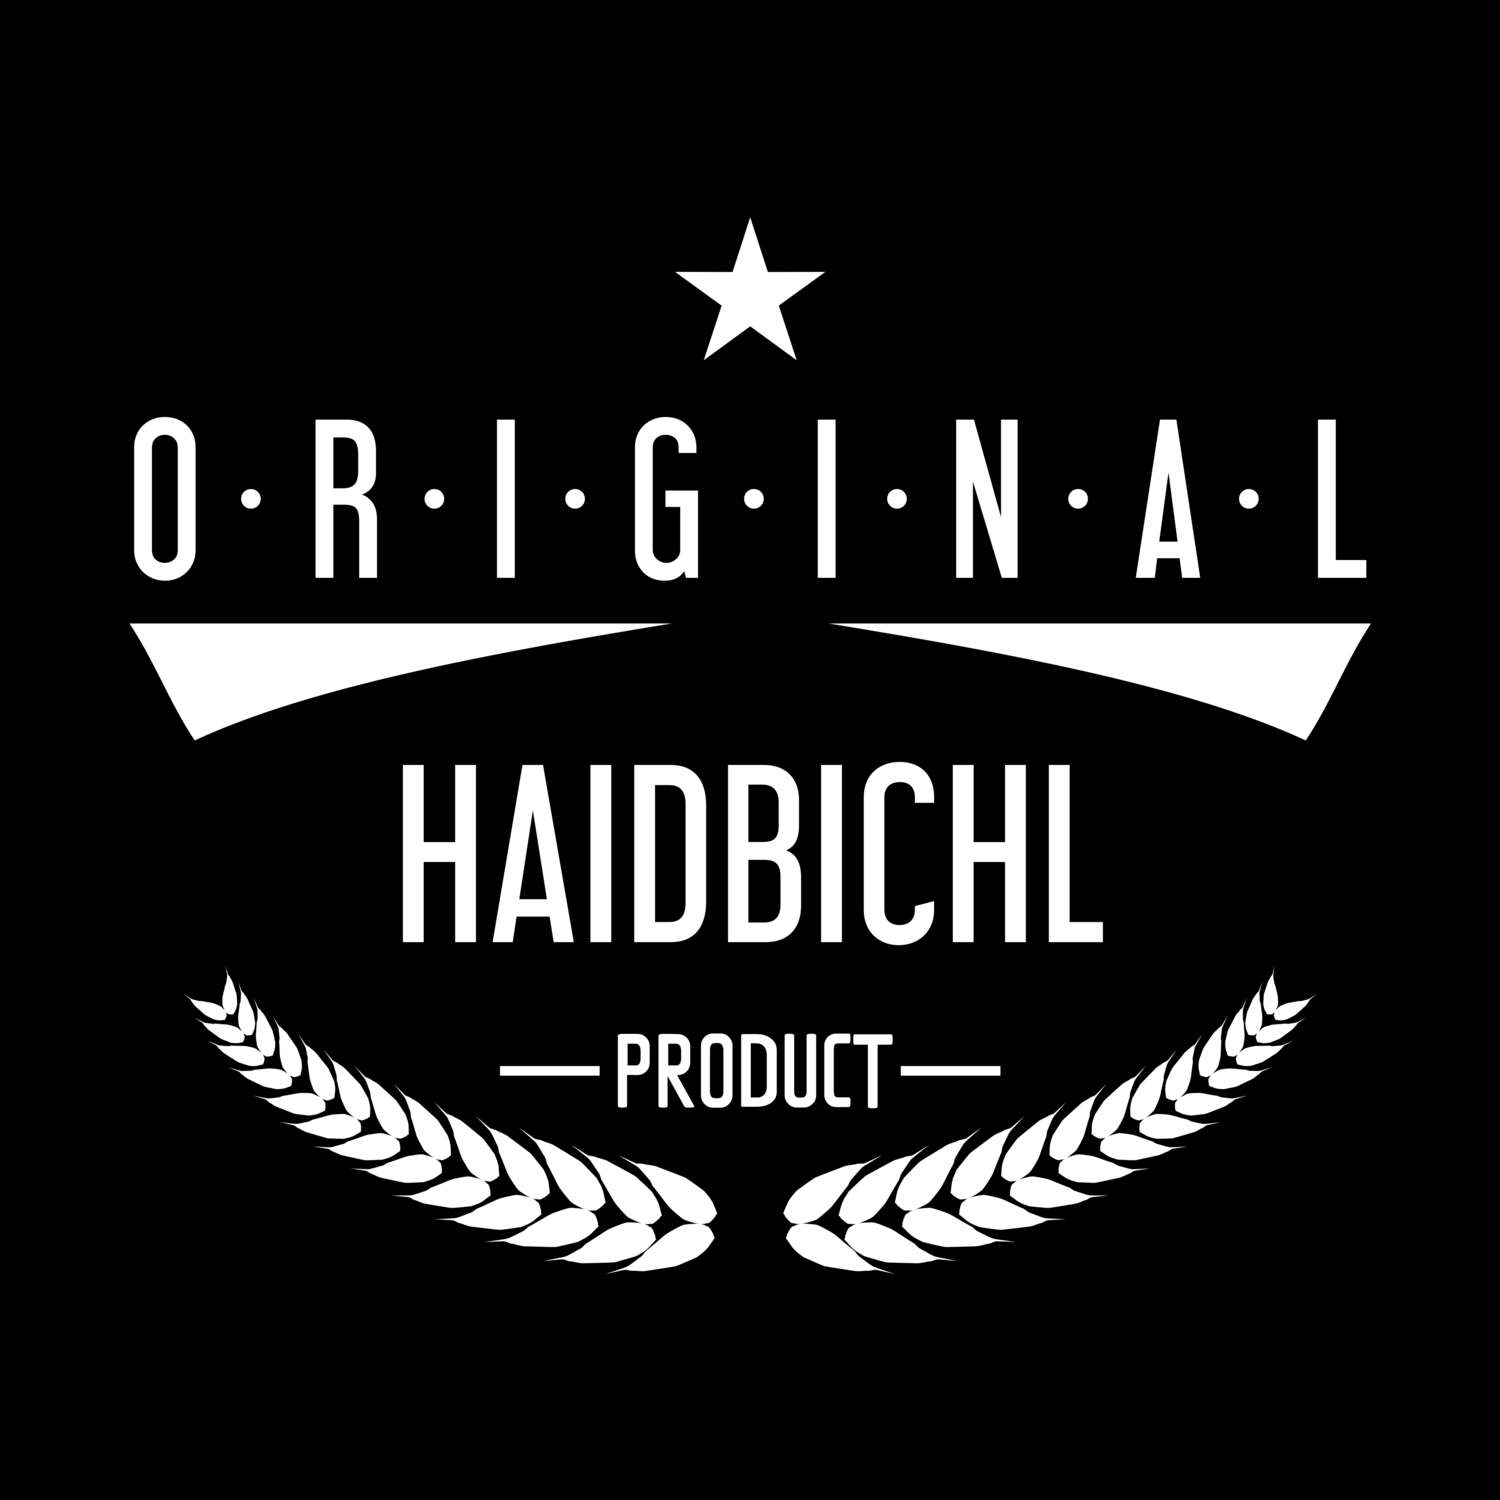 Haidbichl T-Shirt »Original Product«